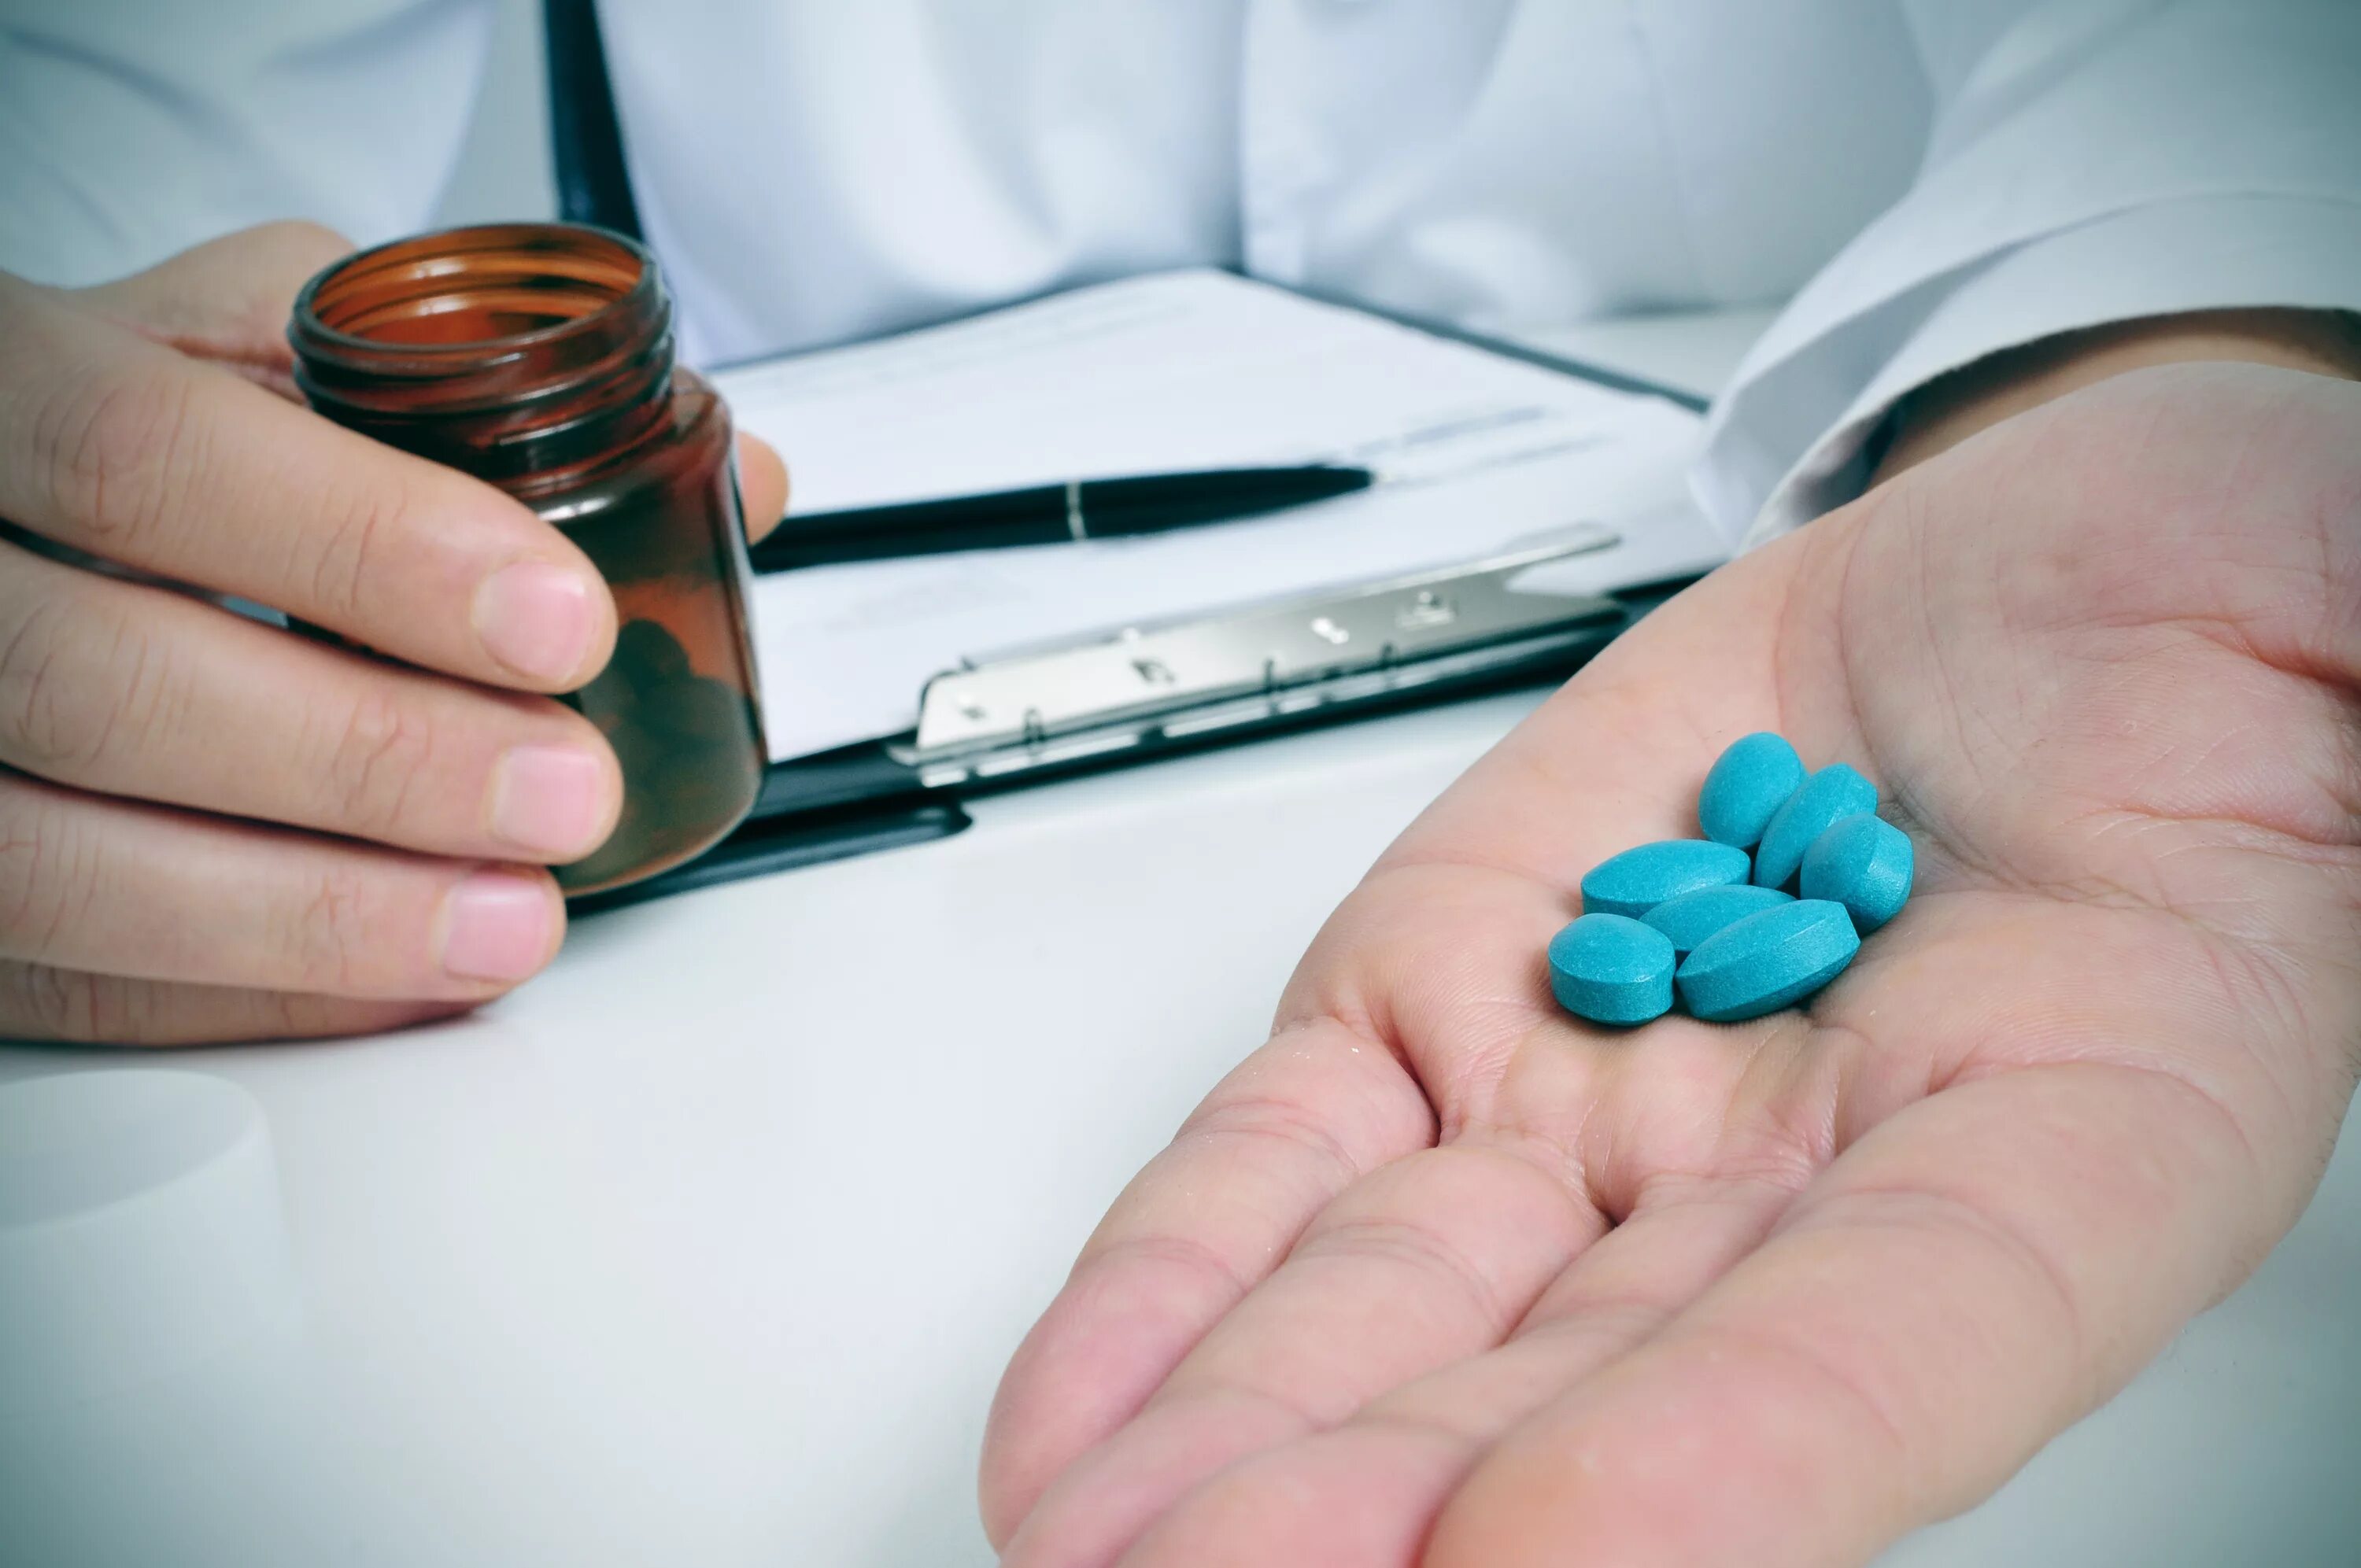 Средства врача для лечения. Лекарства. Лекарства в руке. Синяя таблетка. Врач с таблетками.